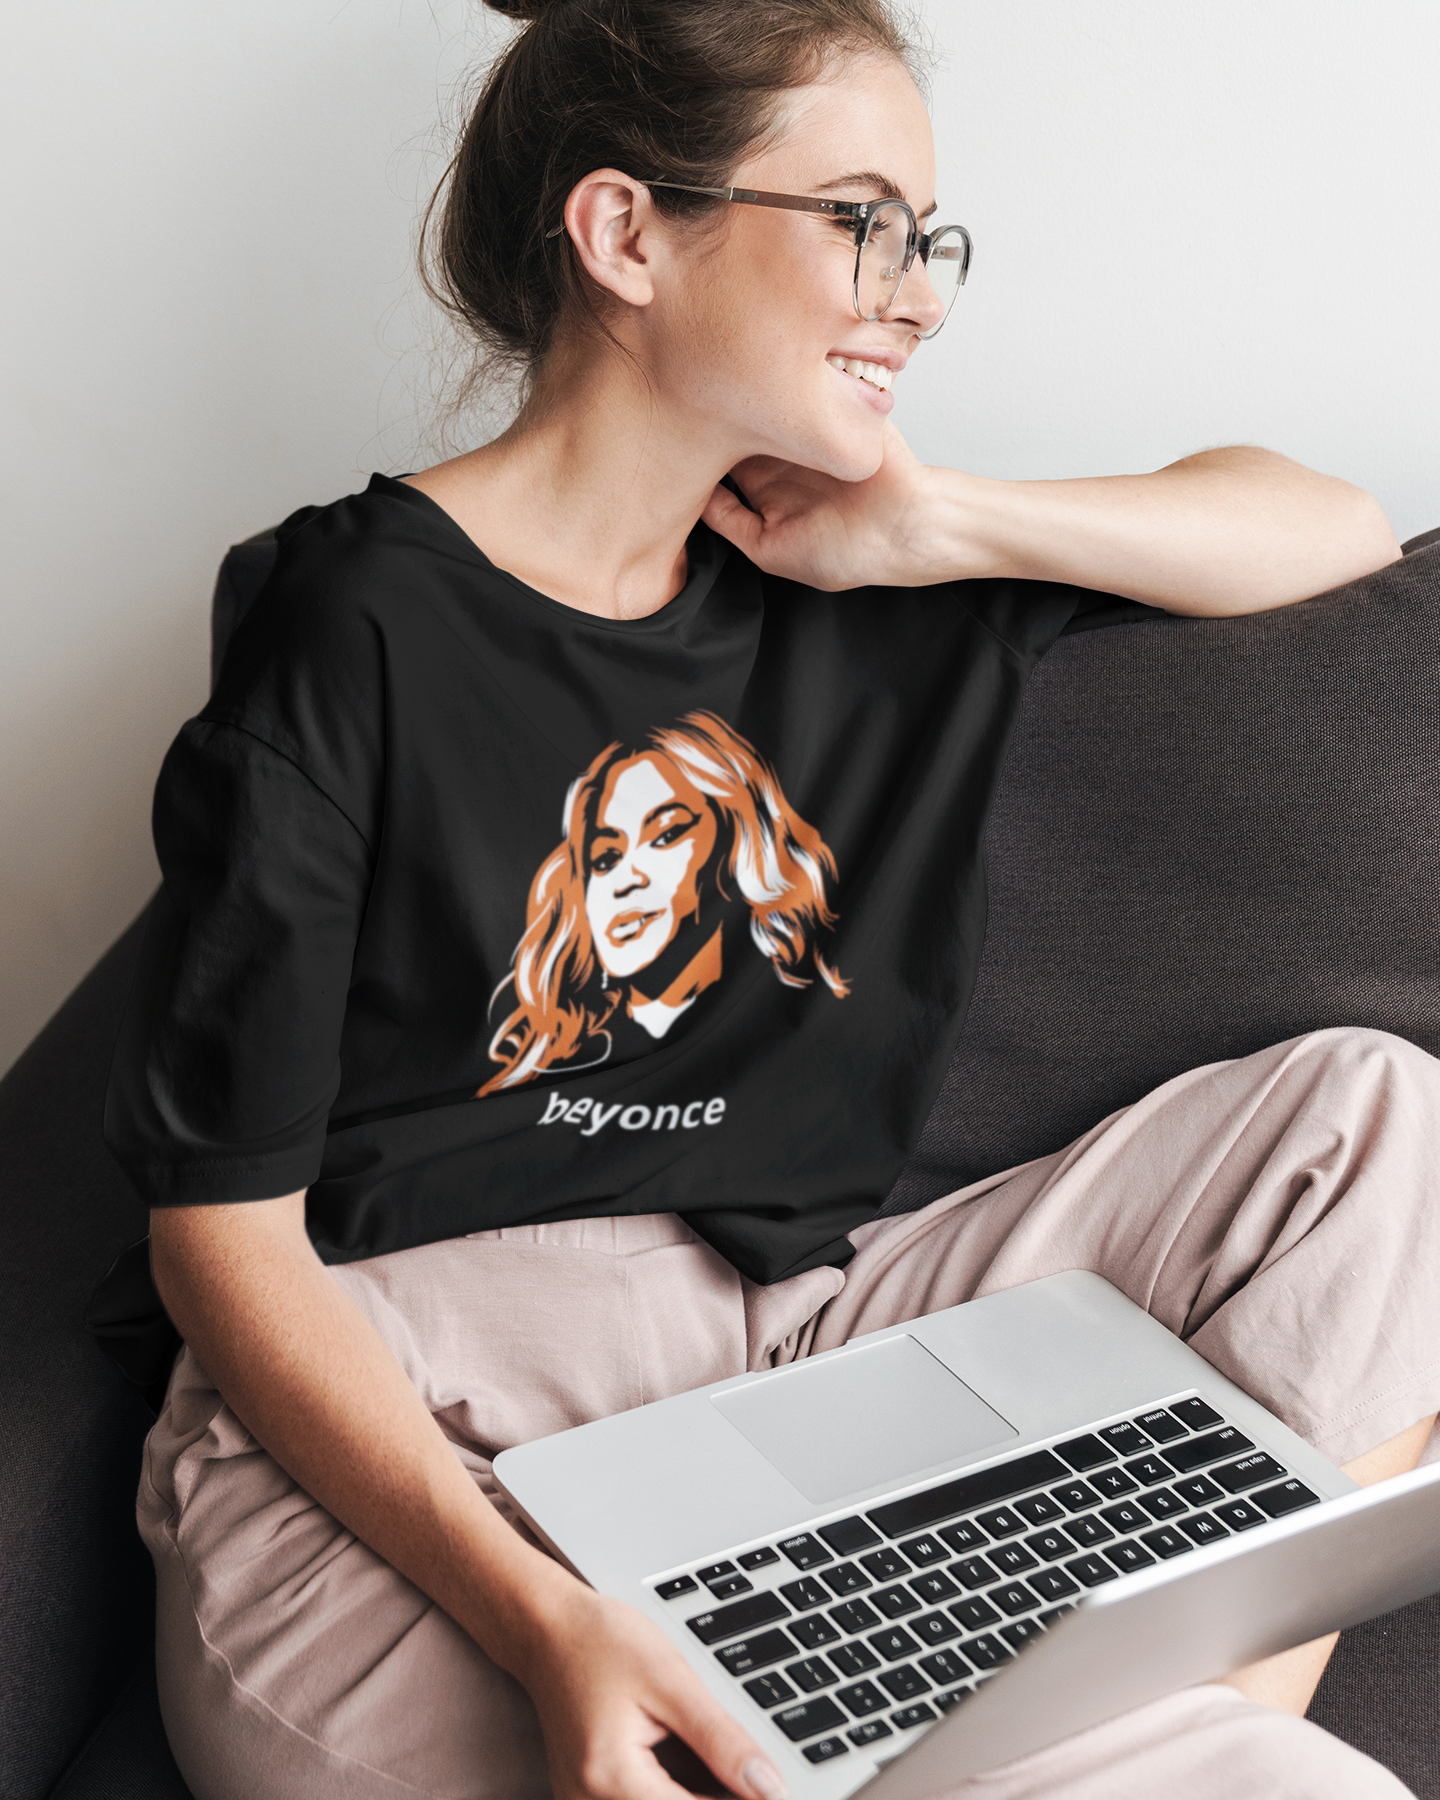 Camiseta "Beyoncé" Faces - Música